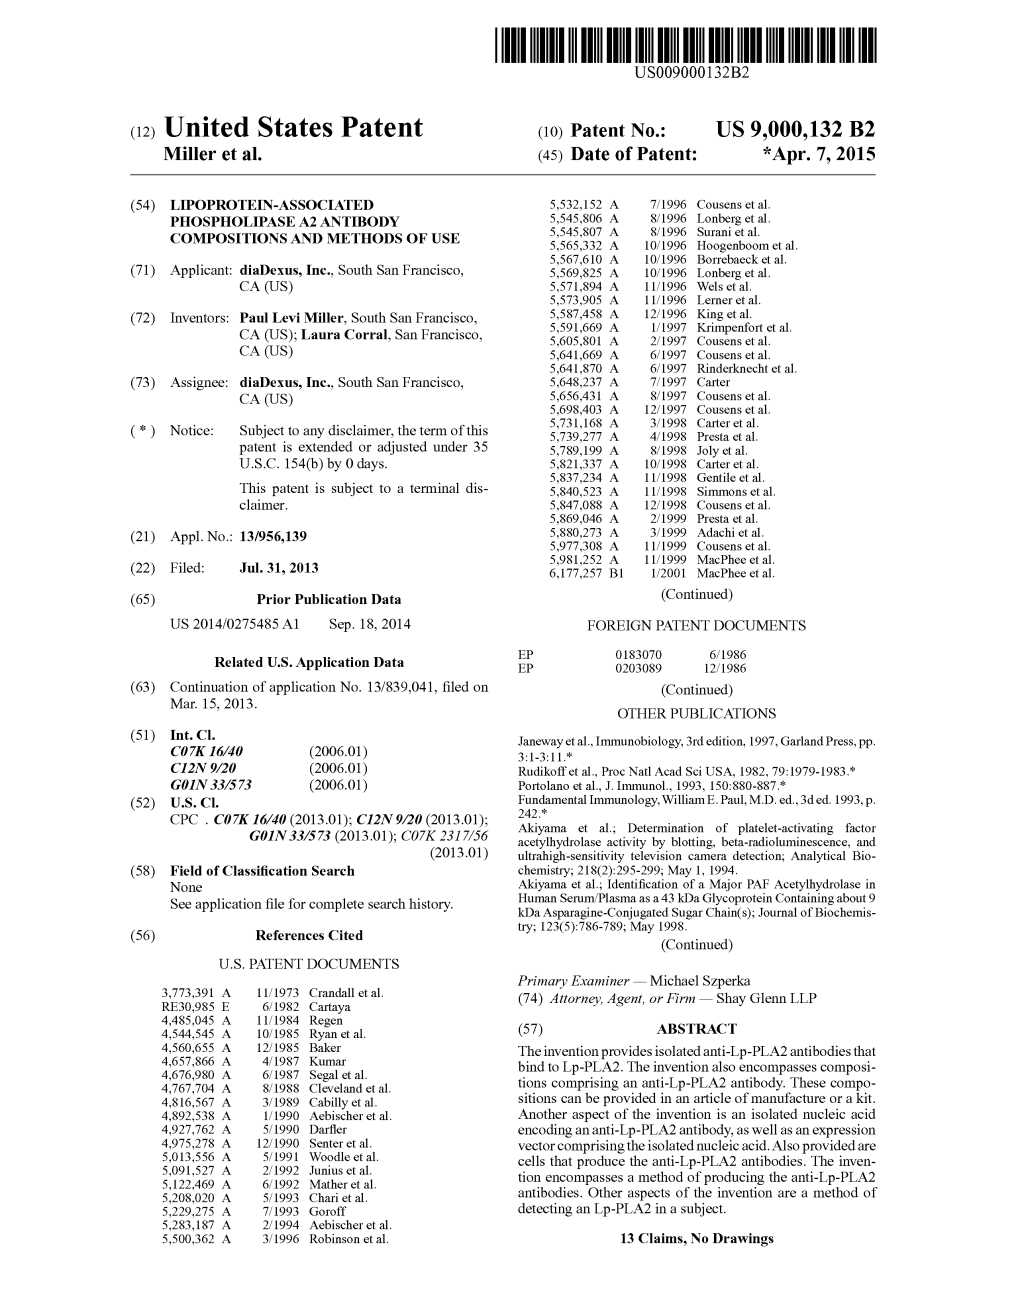 (12) United States Patent (10) Patent No.: US 9,000,132 B2 Miller Et Al